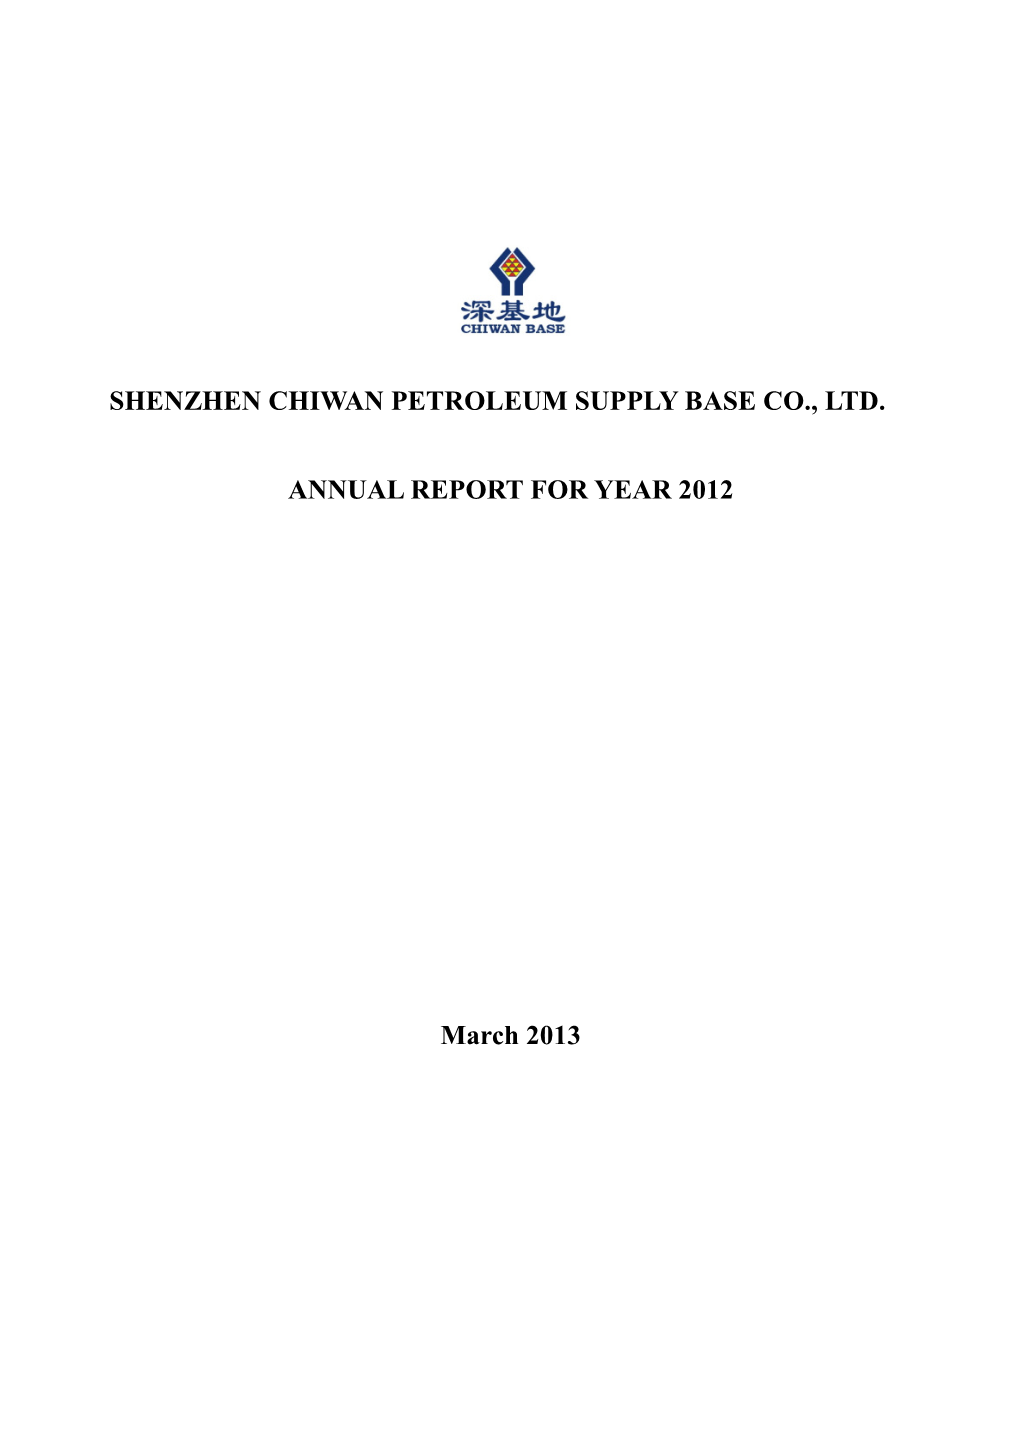 Shenzhen Chiwan Petroleum Supply Base Co., Ltd. Annual